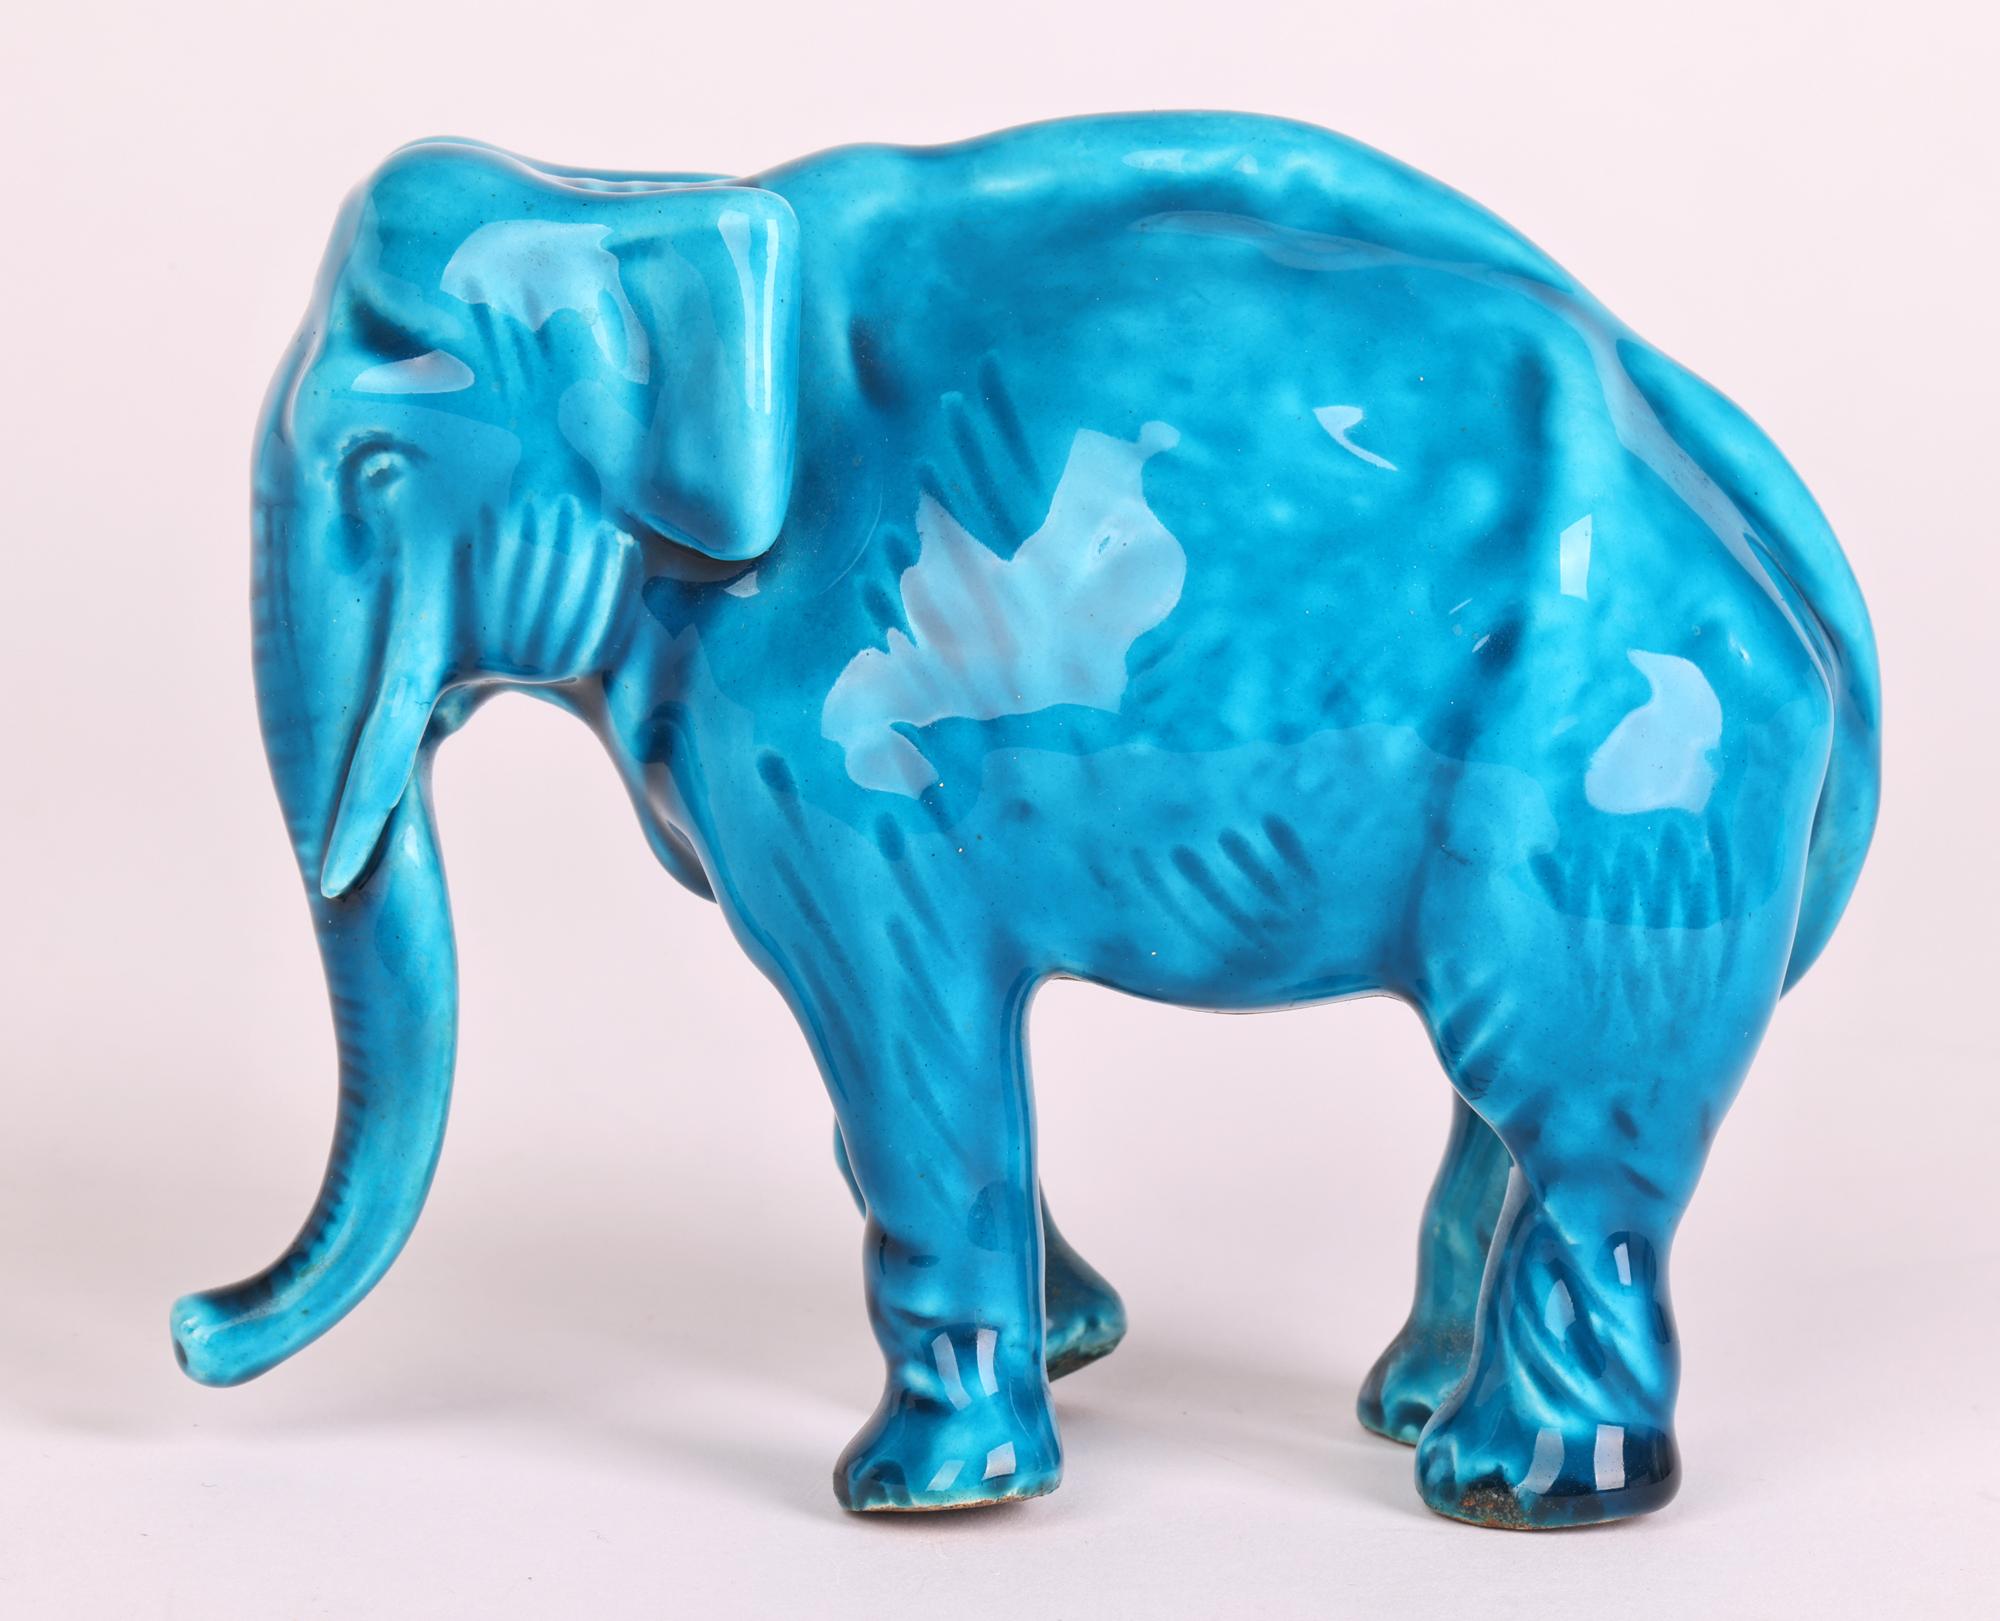 Paul Milet Sevres Turquoise Glazed Ceramic Elephant Figure    For Sale 1